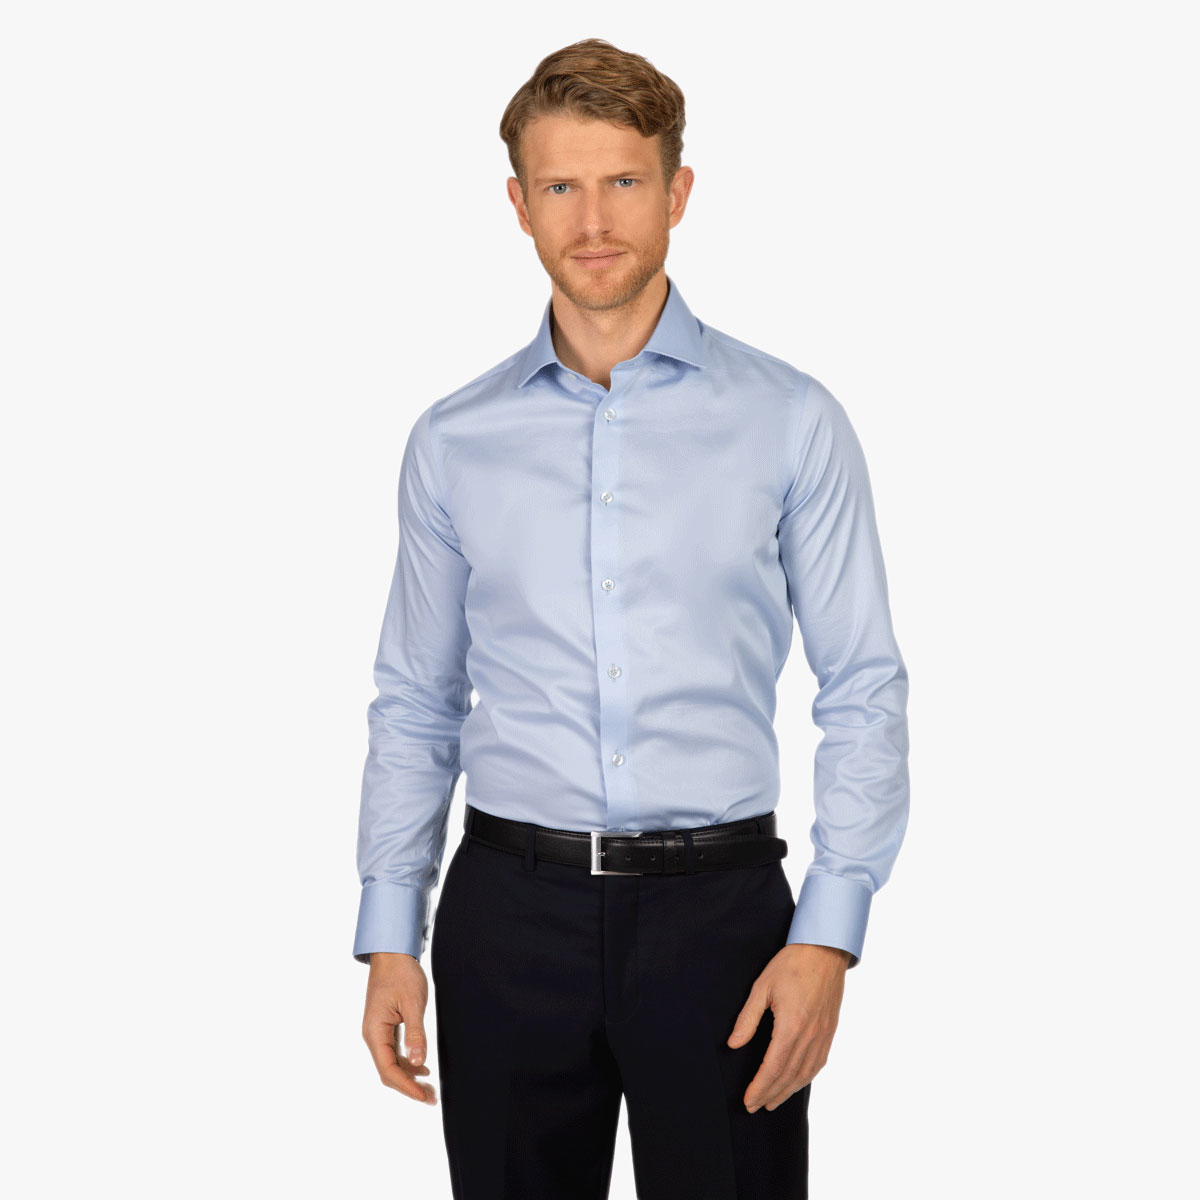 Super Slim Fit Hemd in hellblau aus Baumwolle-Stretch